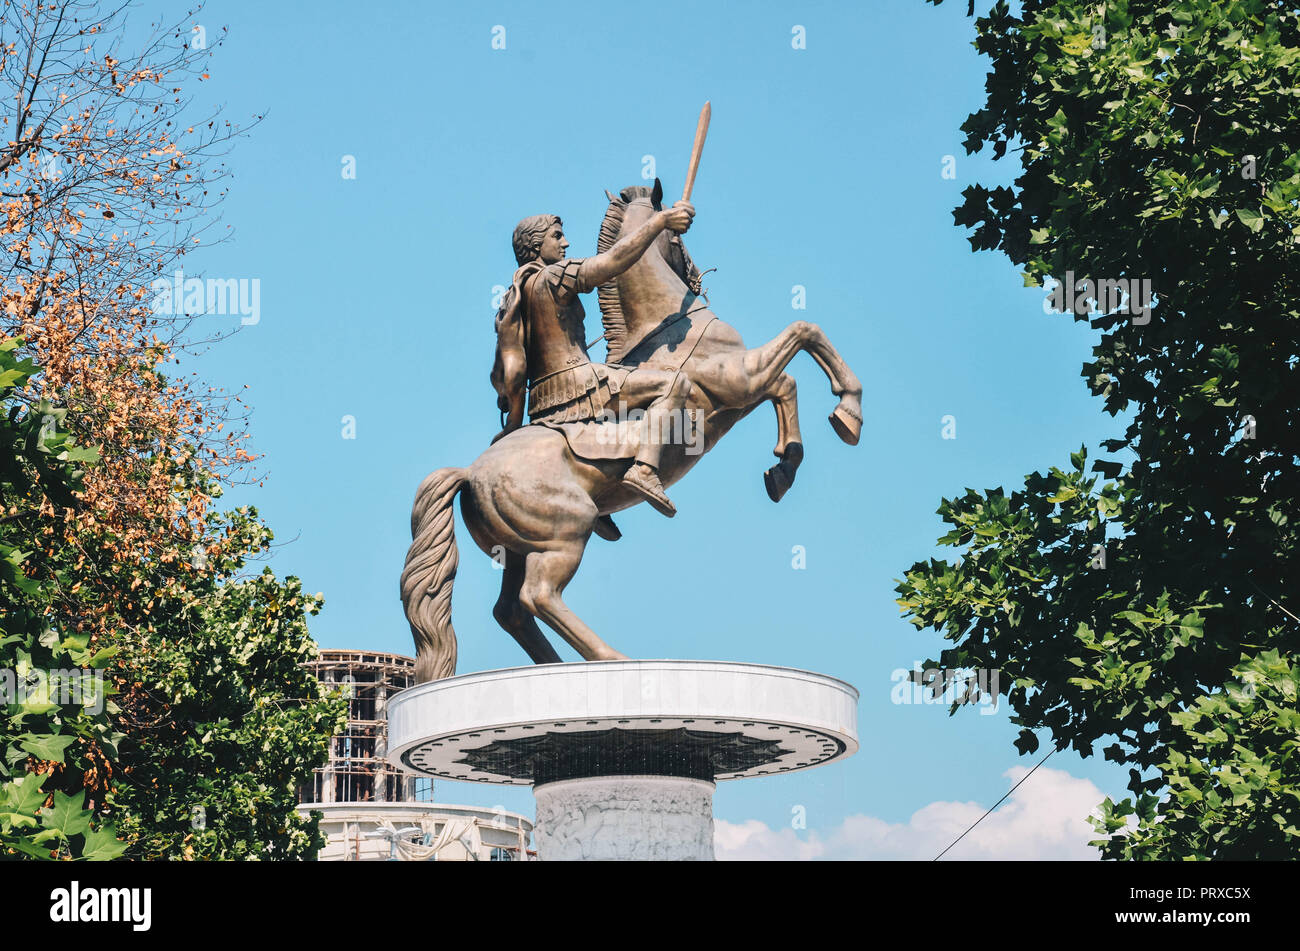 Statue of Alexander the Great, Macedonia Square, Skopje, Republic of Macedonia, September 2018 Stock Photo